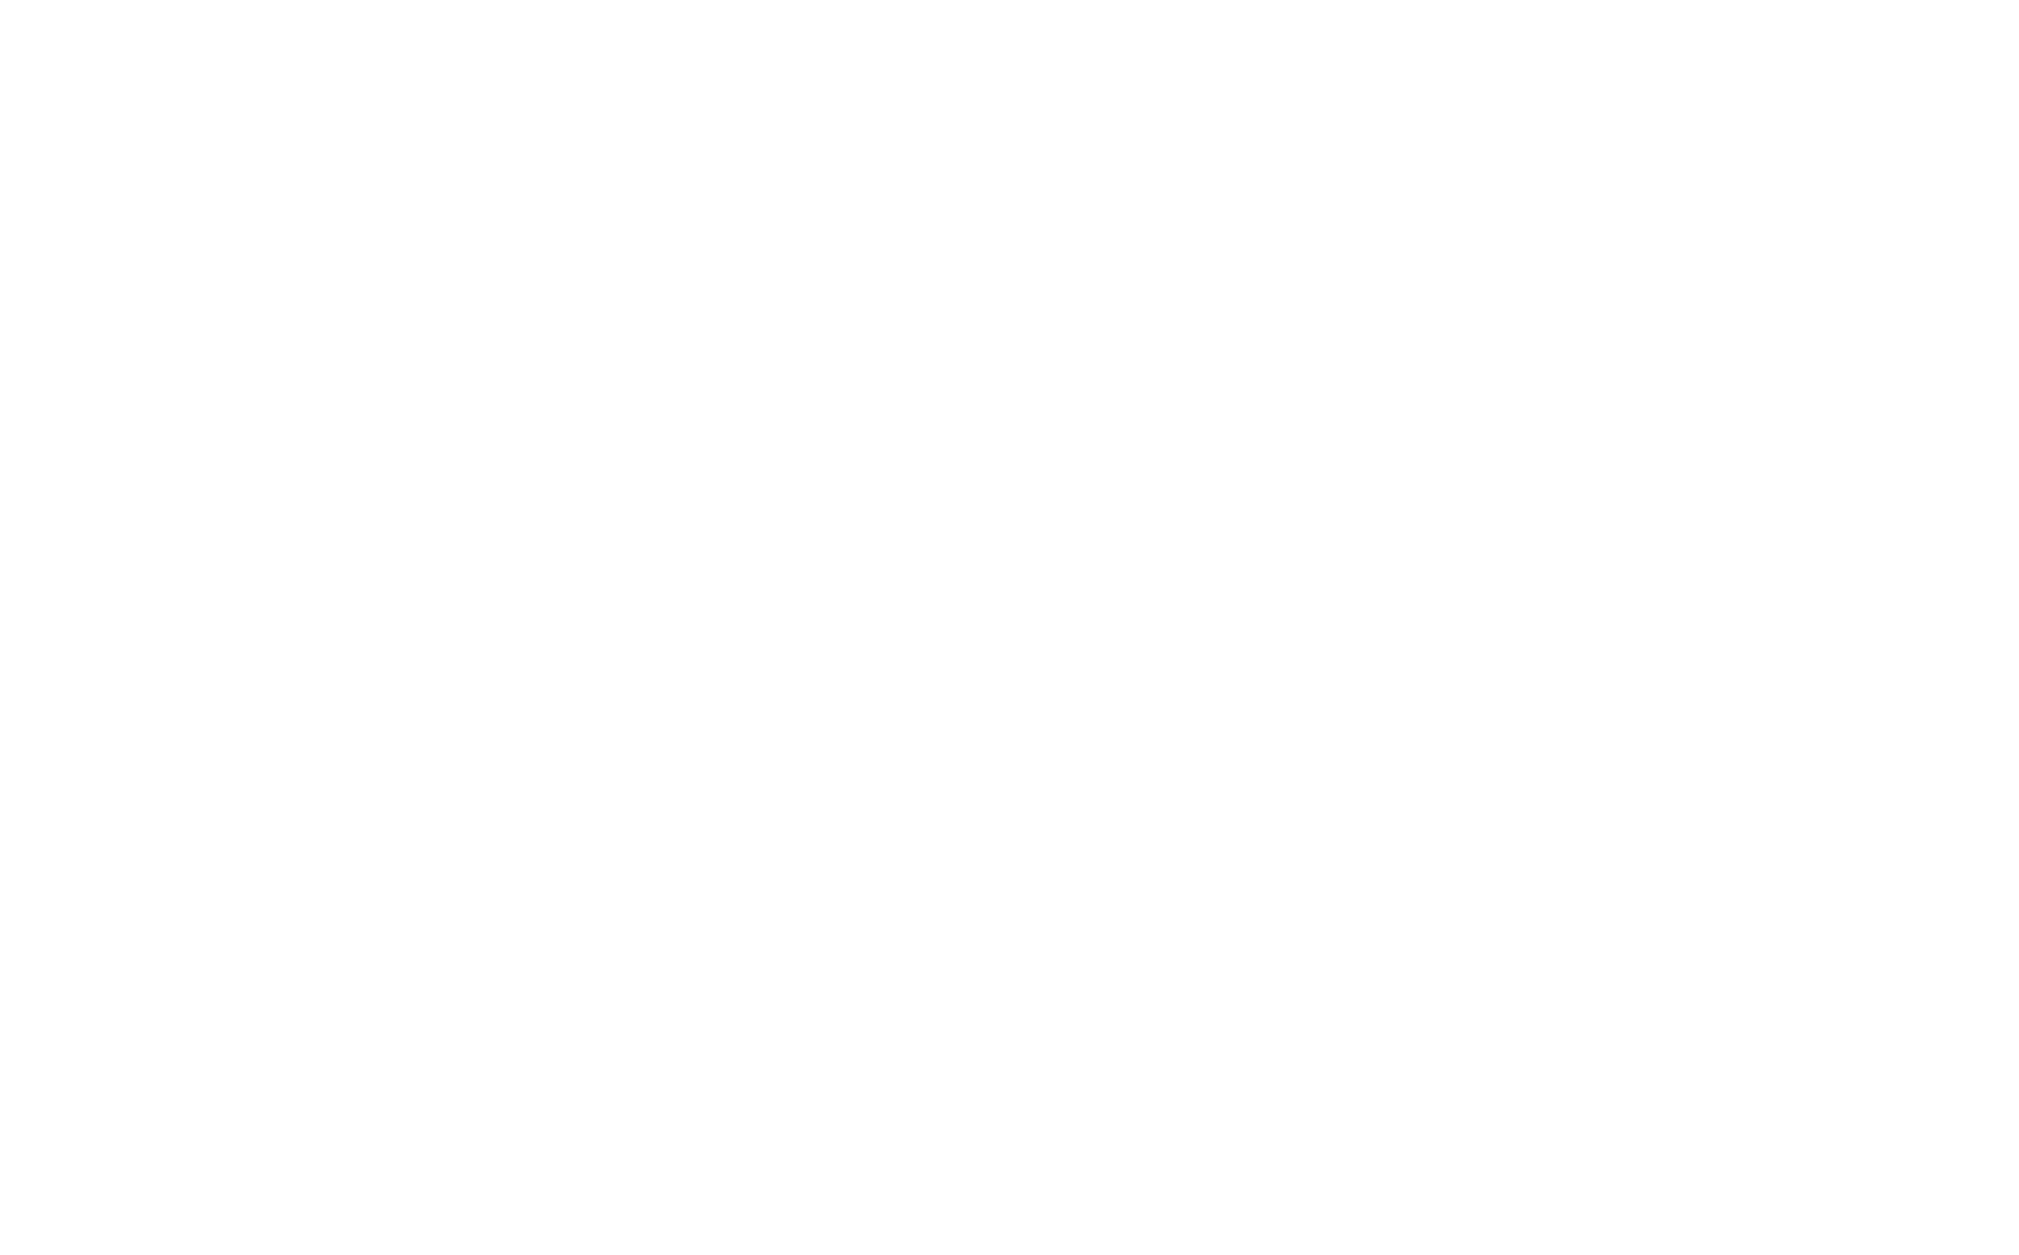 Border Control: Brazil logo